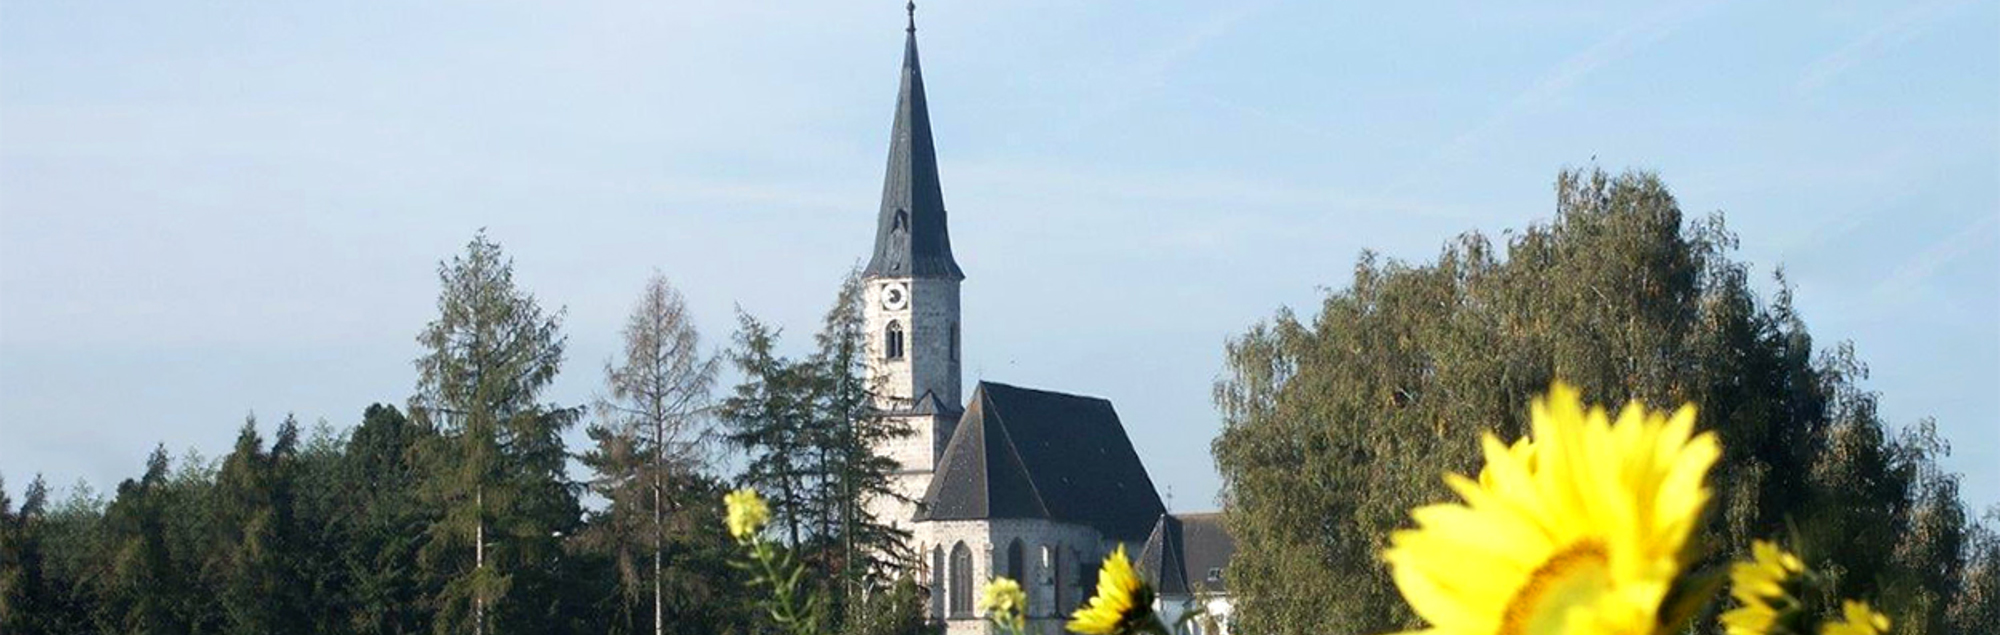 Pfarrkirche Kirchdorf am Inn